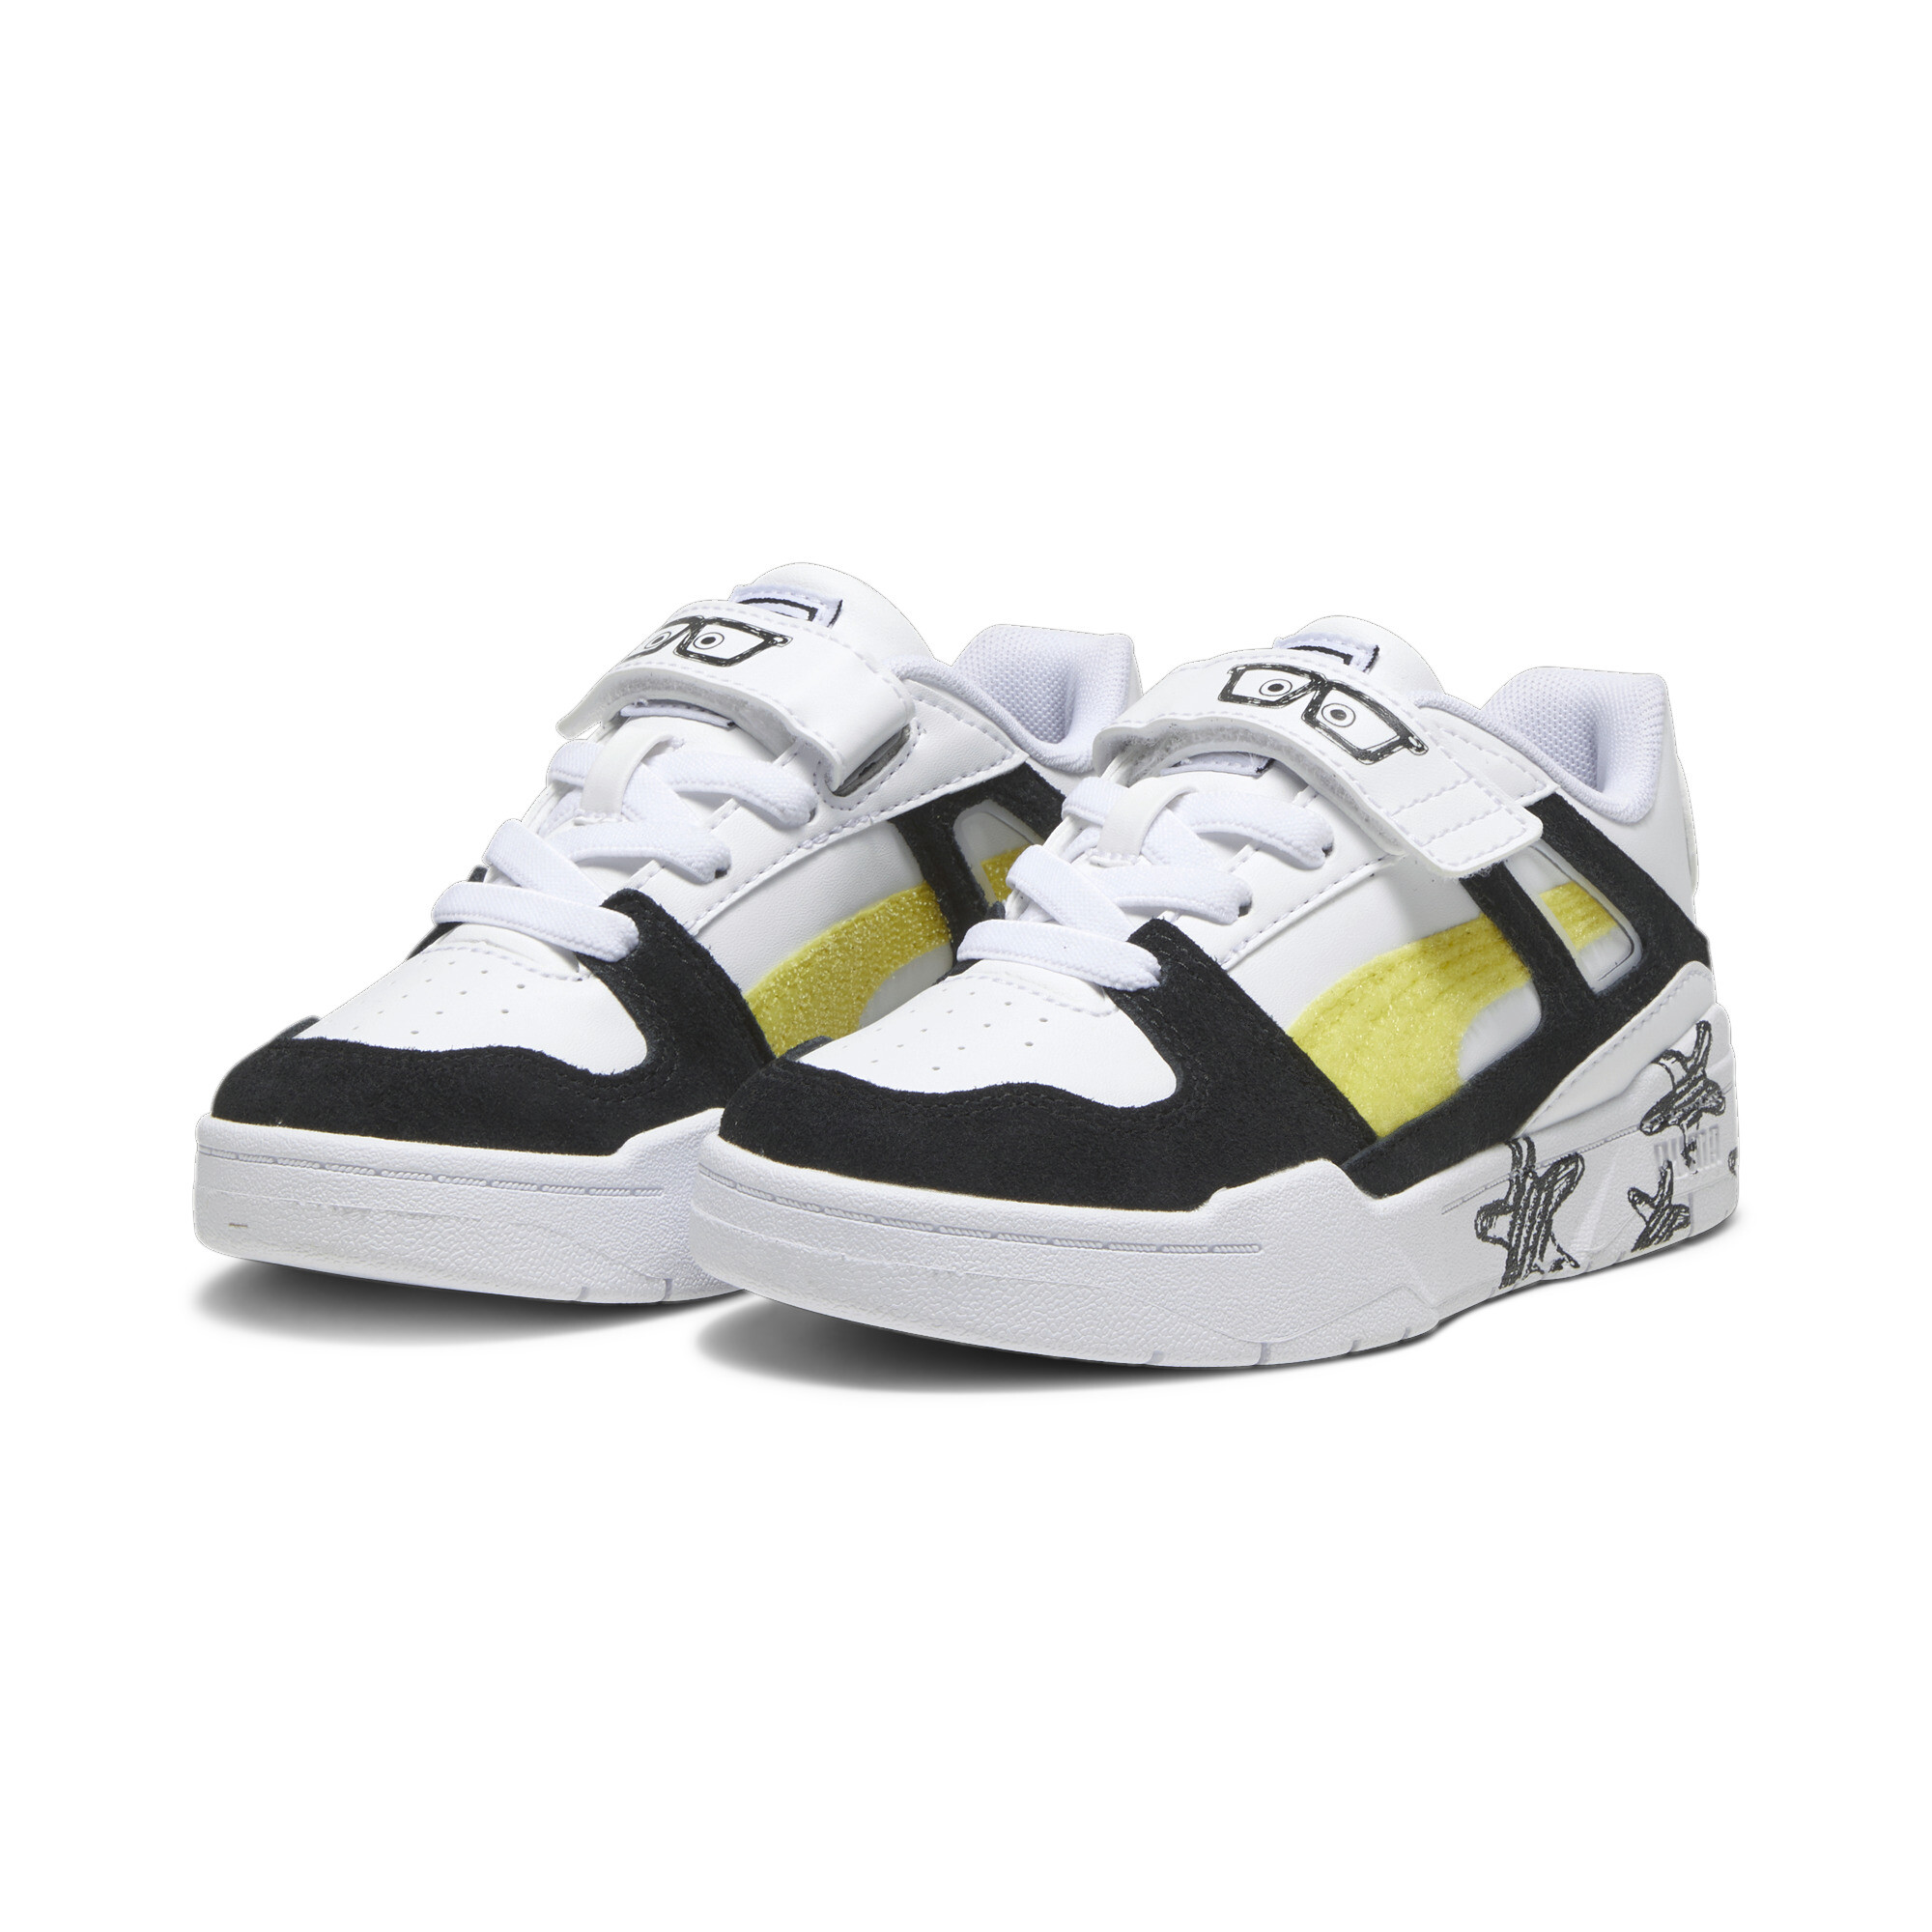 Kids' PUMA X SPONGEBOB SQUAREPANTS Slipstream Sneakers In White, Size EU 29